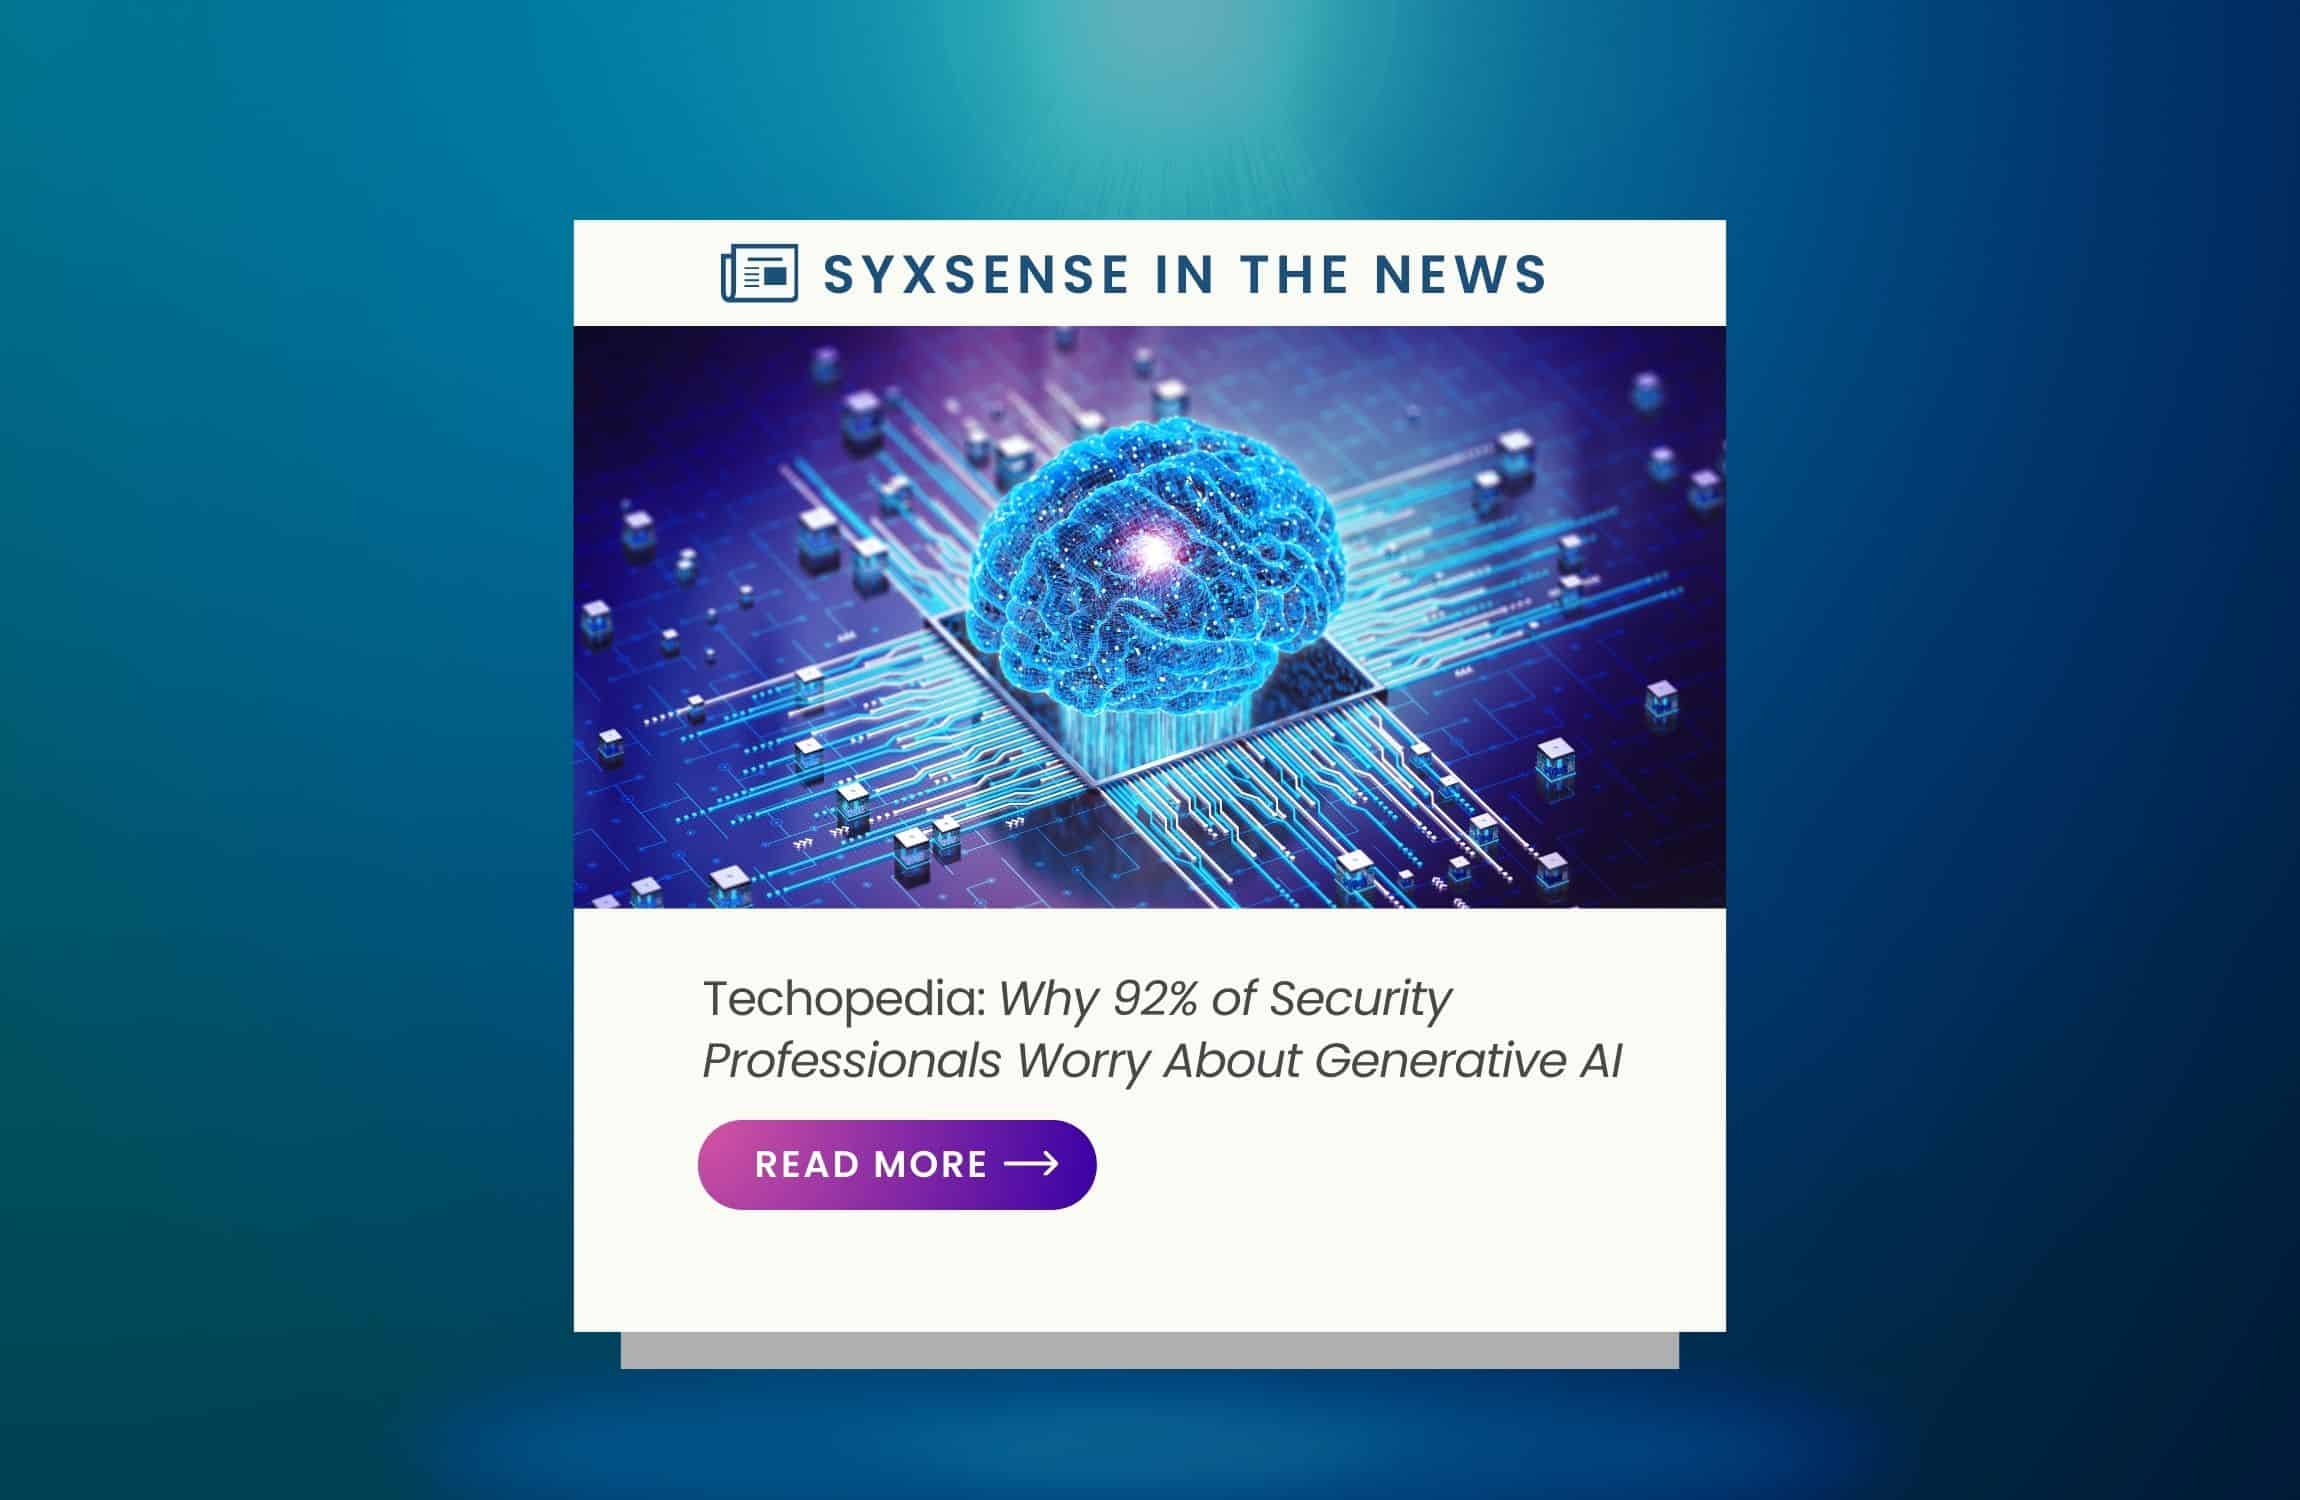 Syxsense in the news (Techopedia)